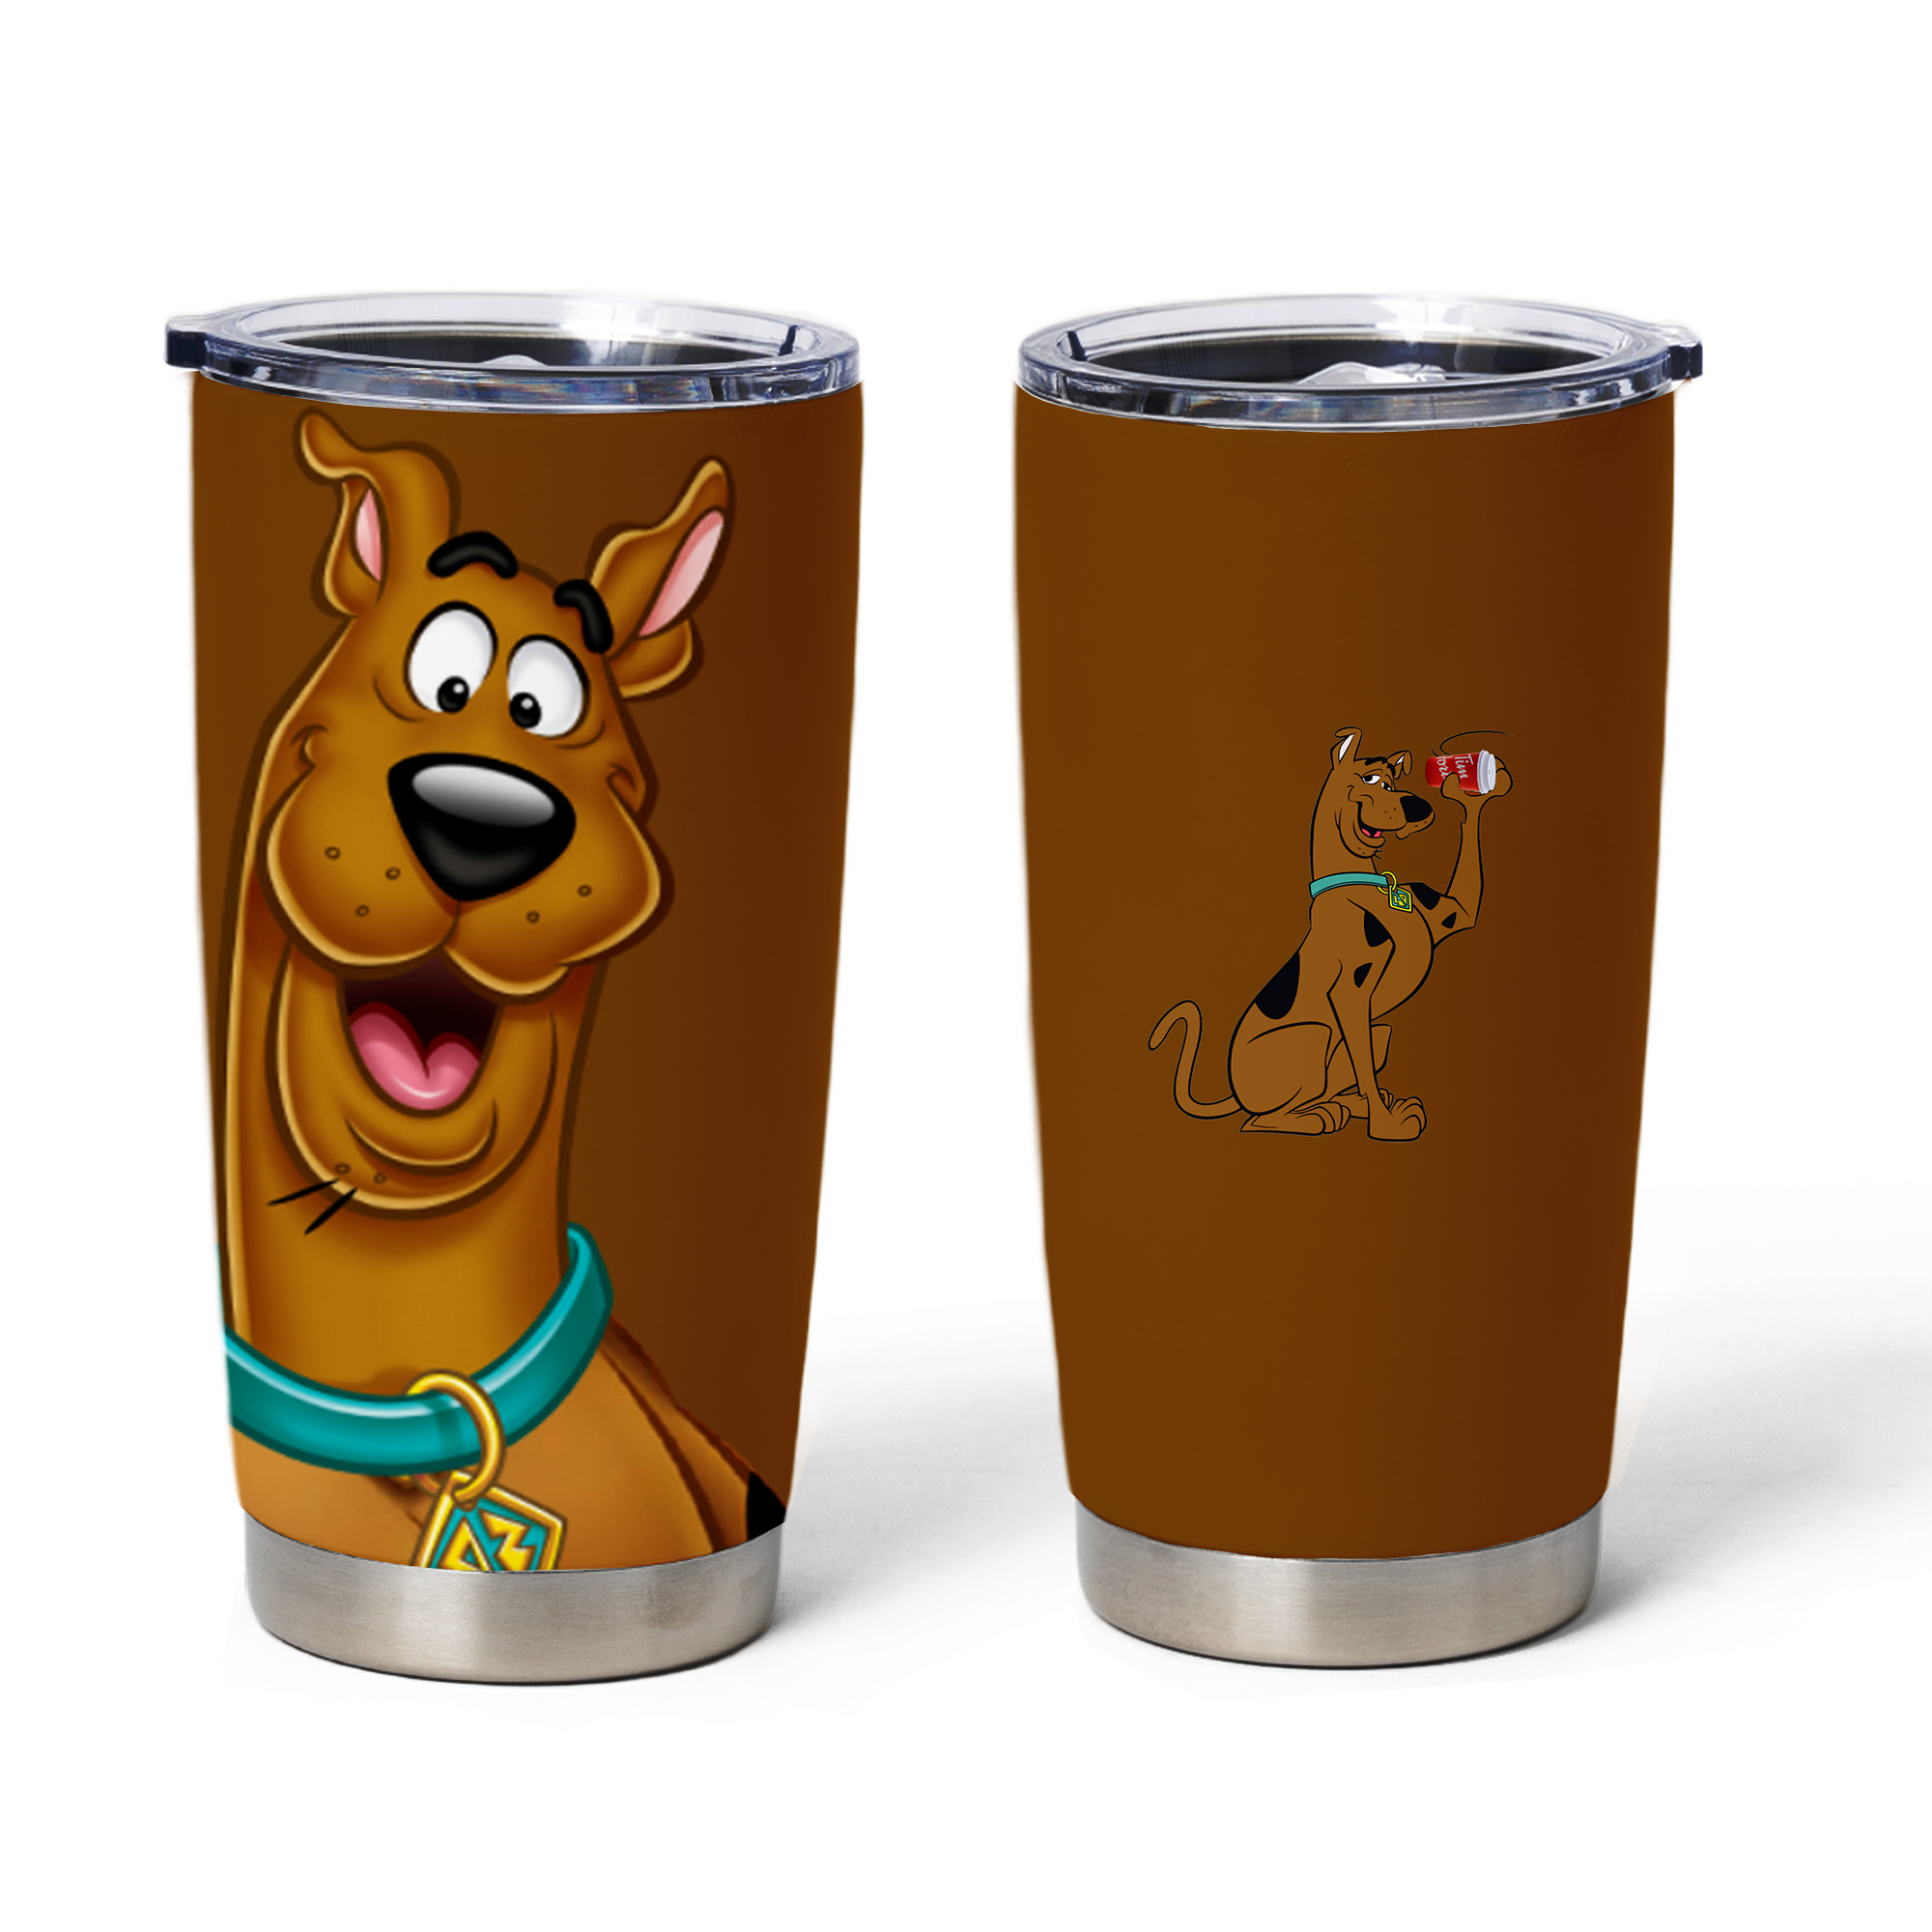 Scooby Doo Brown Tumbler Cup Tim hortons